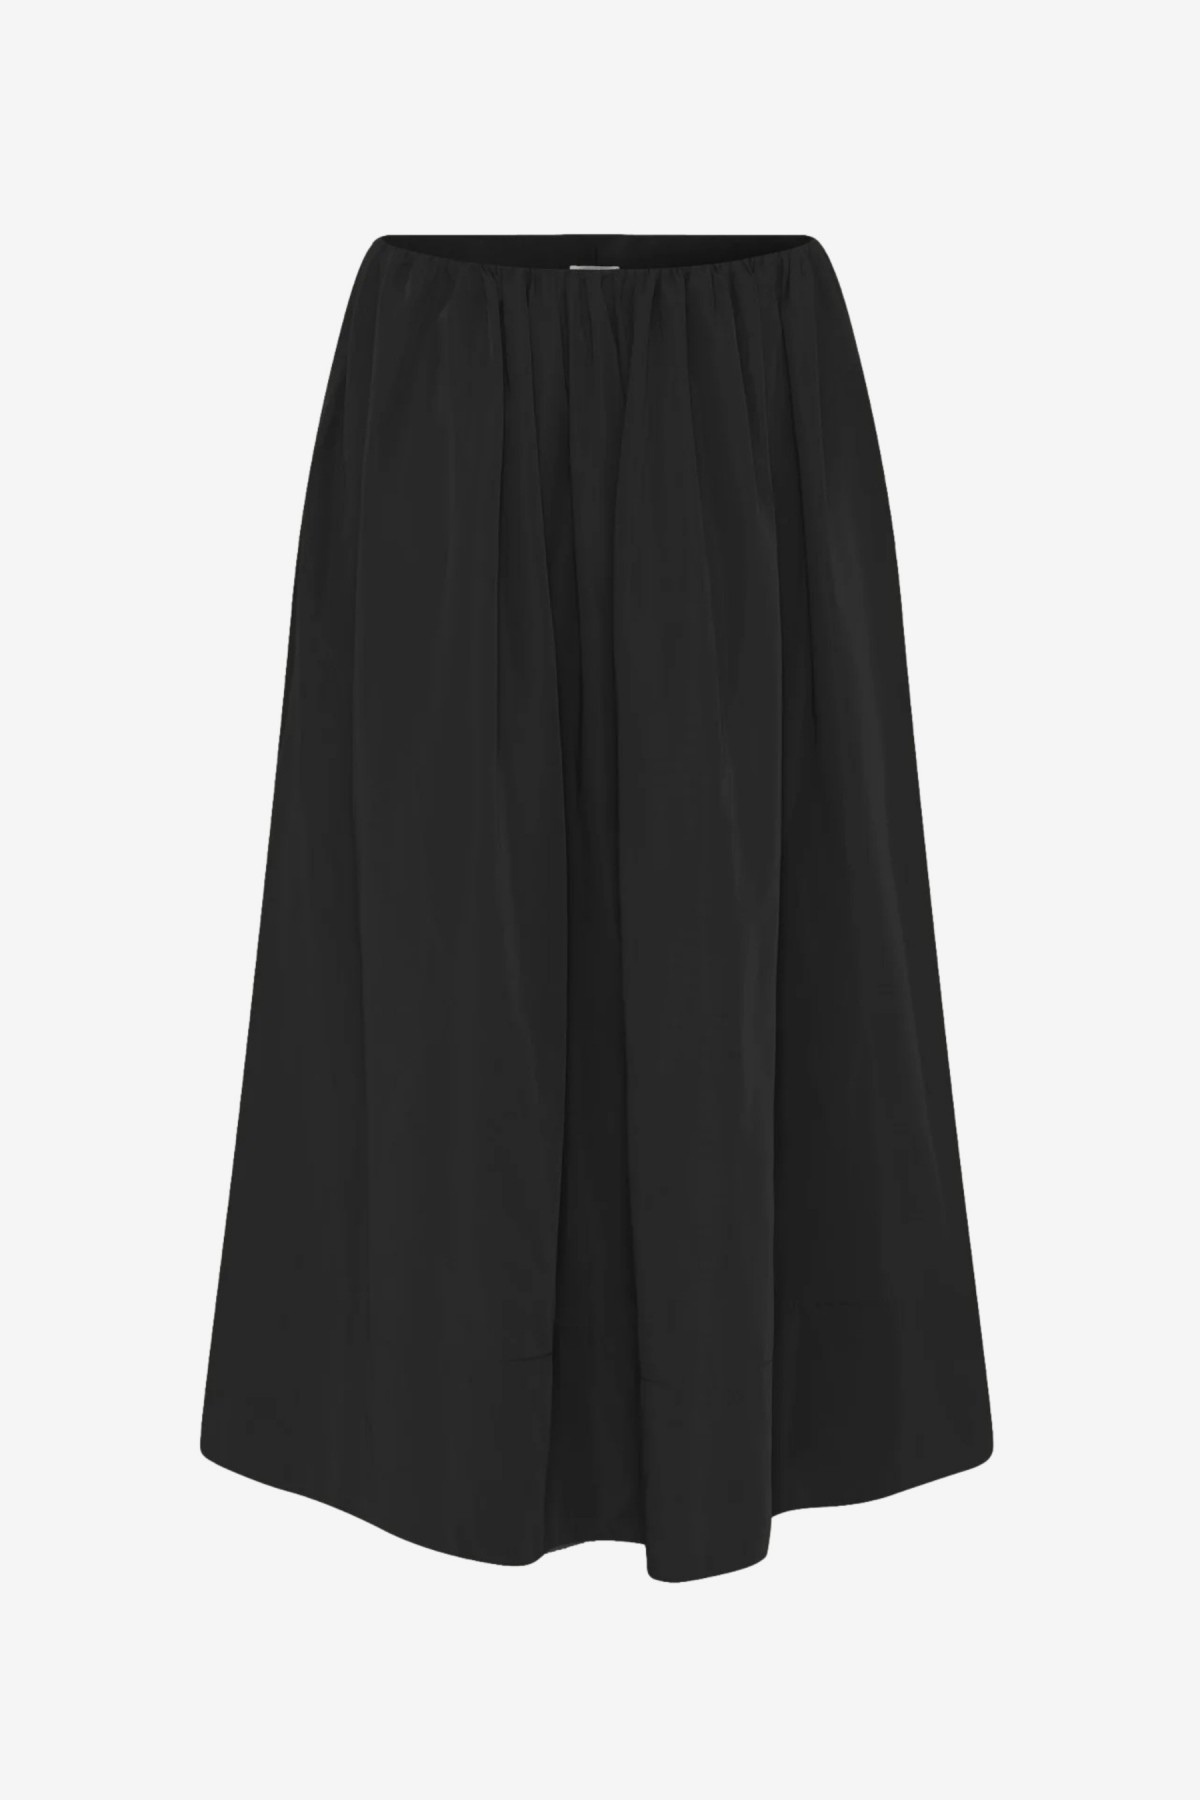 Herskind Miss Skirt in Black